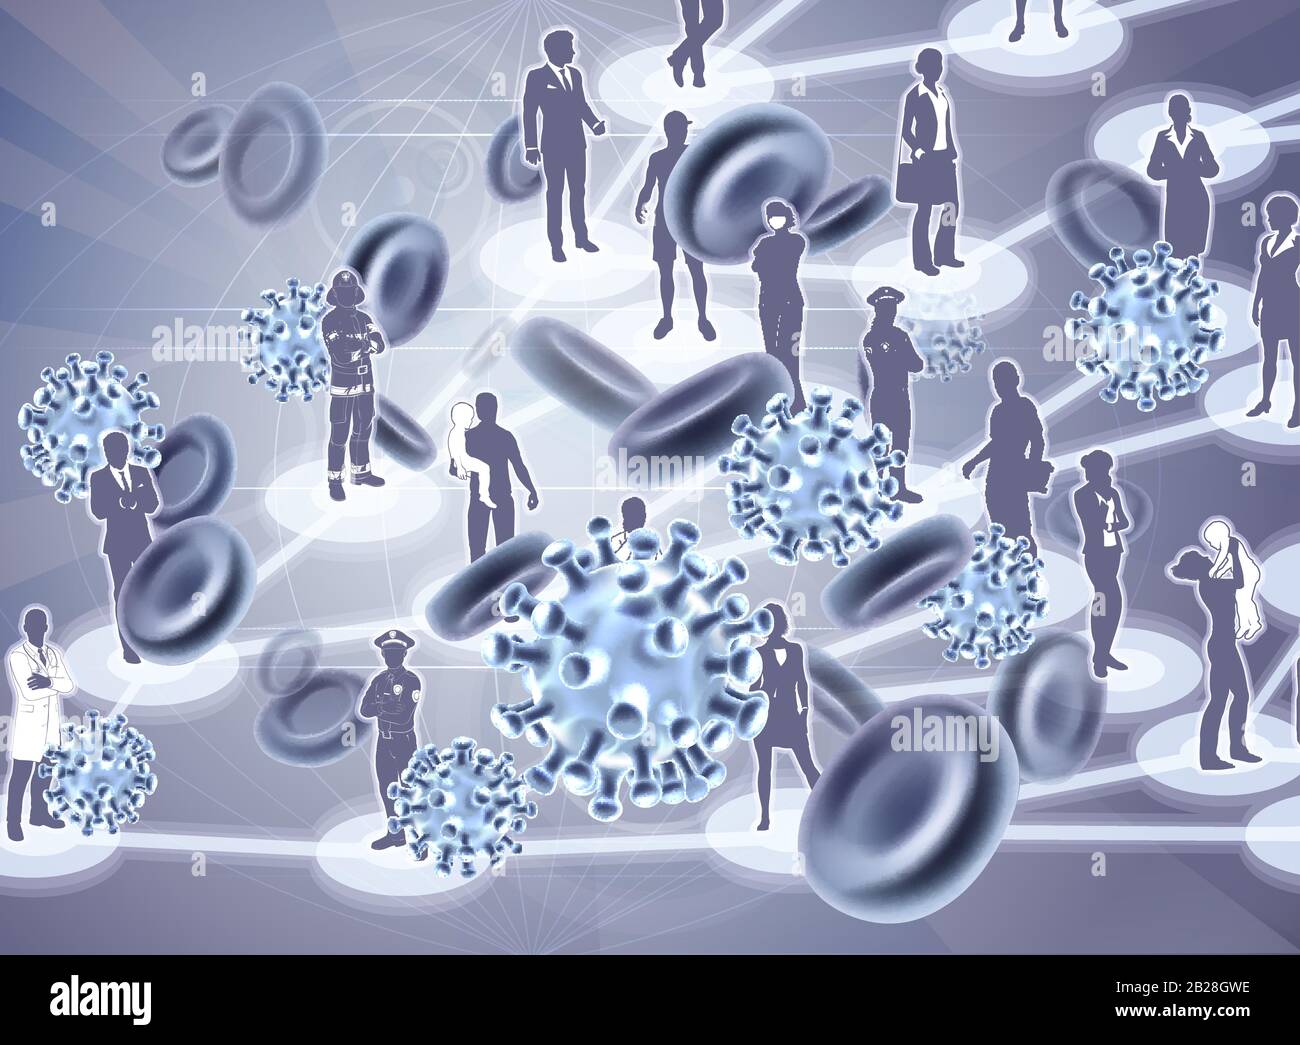 Viruszellen Virale Verbreitung Pandemie Menschen Konzept Stock Vektor